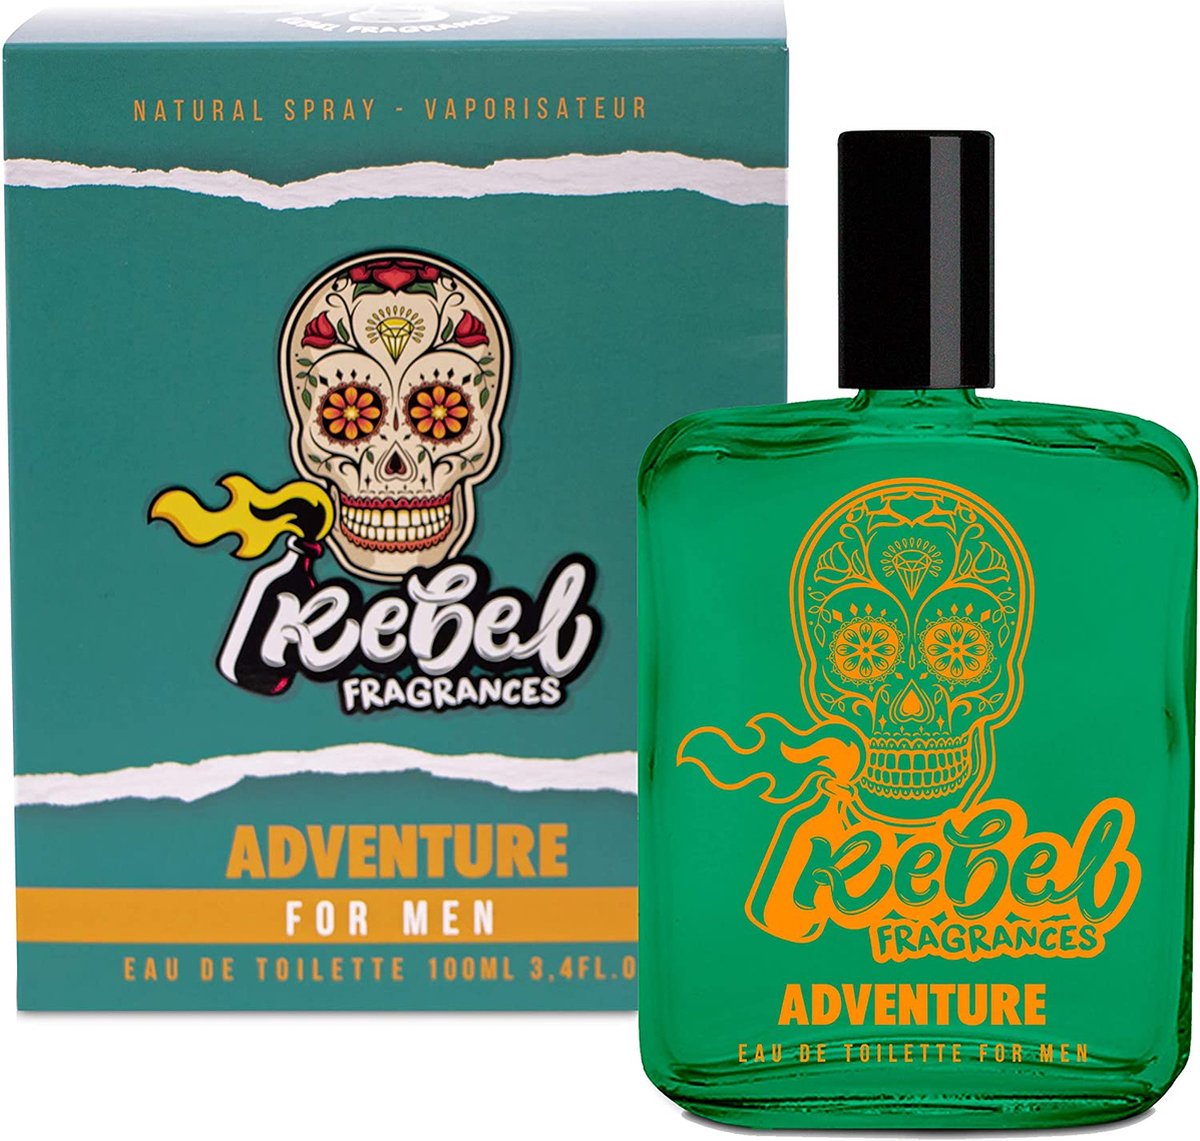 Rebel Fragrances Adventure Eau De Toilette Mannen - 100 ml - Mannen Parfum - Mannen Cadeautjes - Verleidelijk en Intrigerend Herengeur